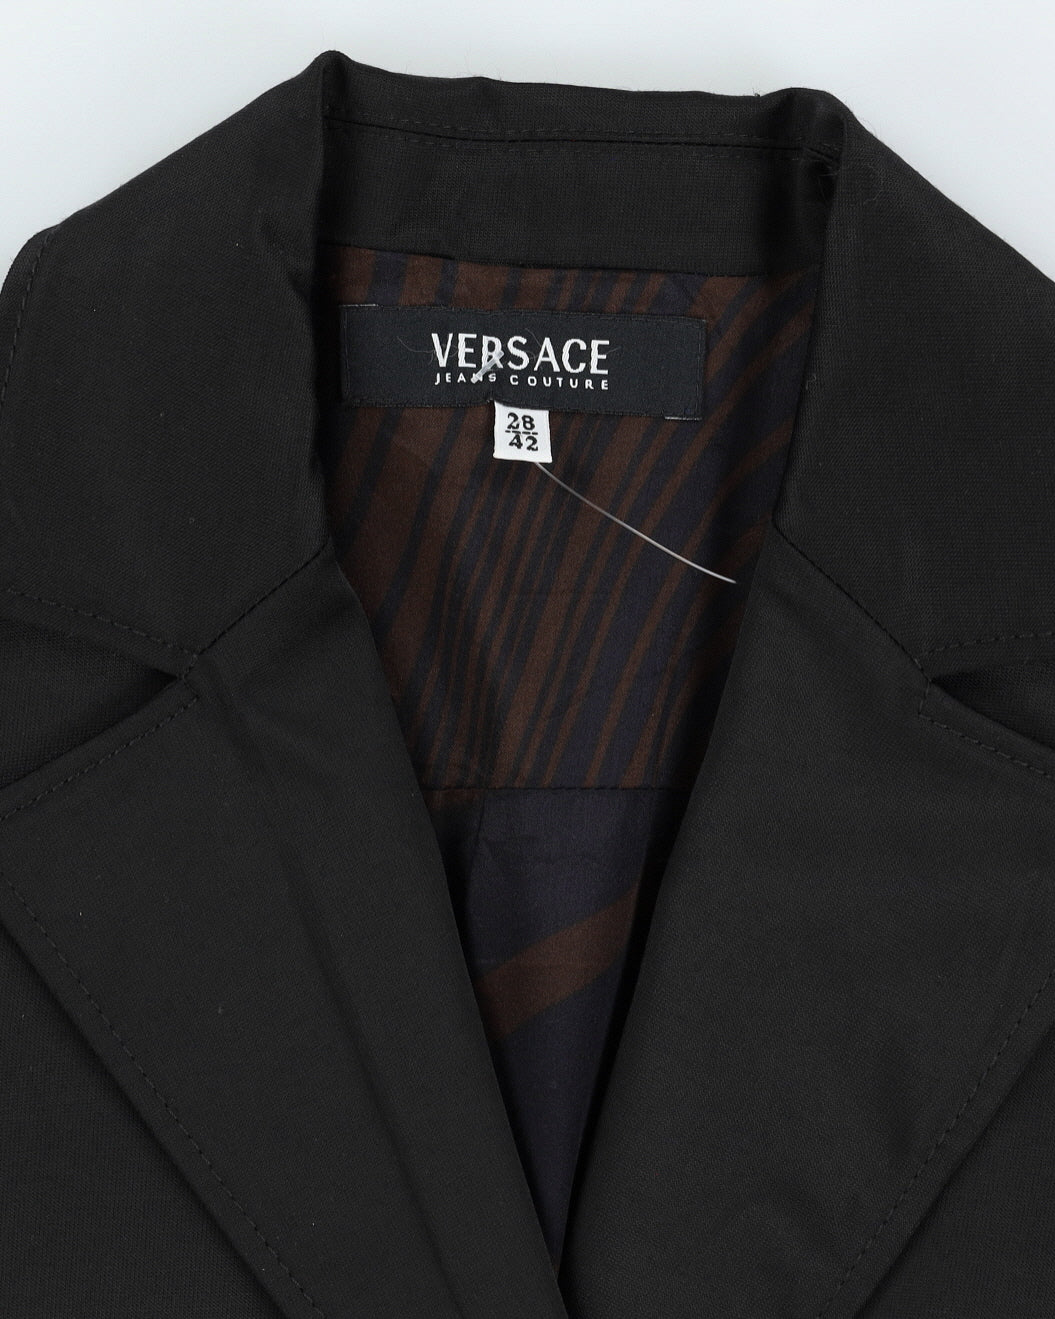 Versace Jeans Blazer Jacket - S